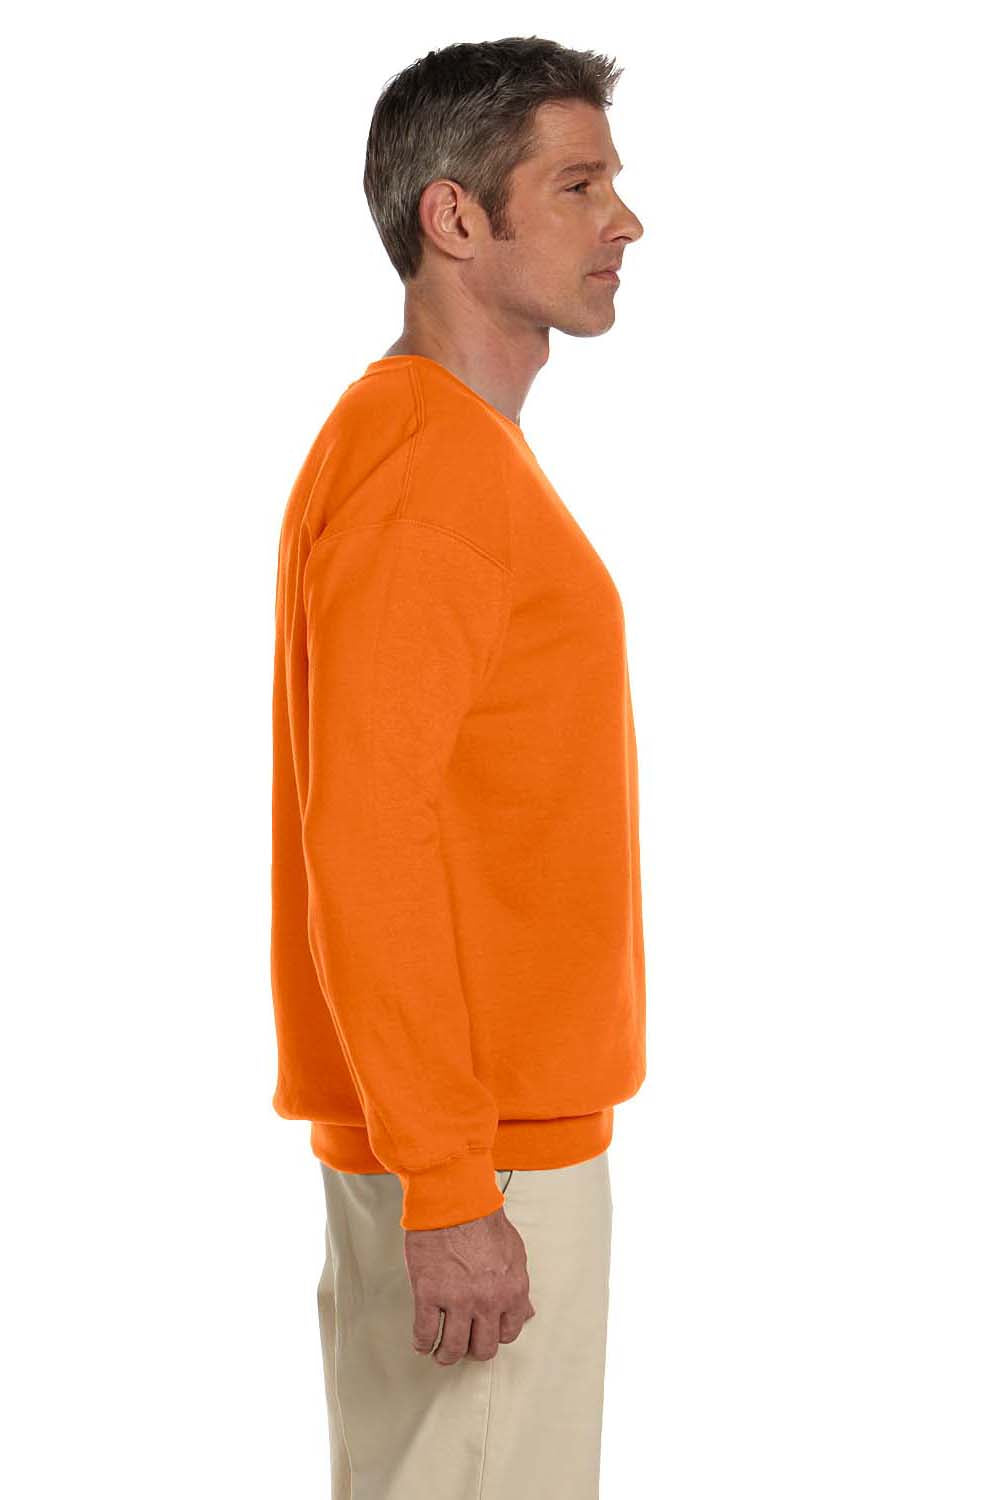 Gildan G180 Mens Fleece Crewneck Sweatshirt Safety Orange Side